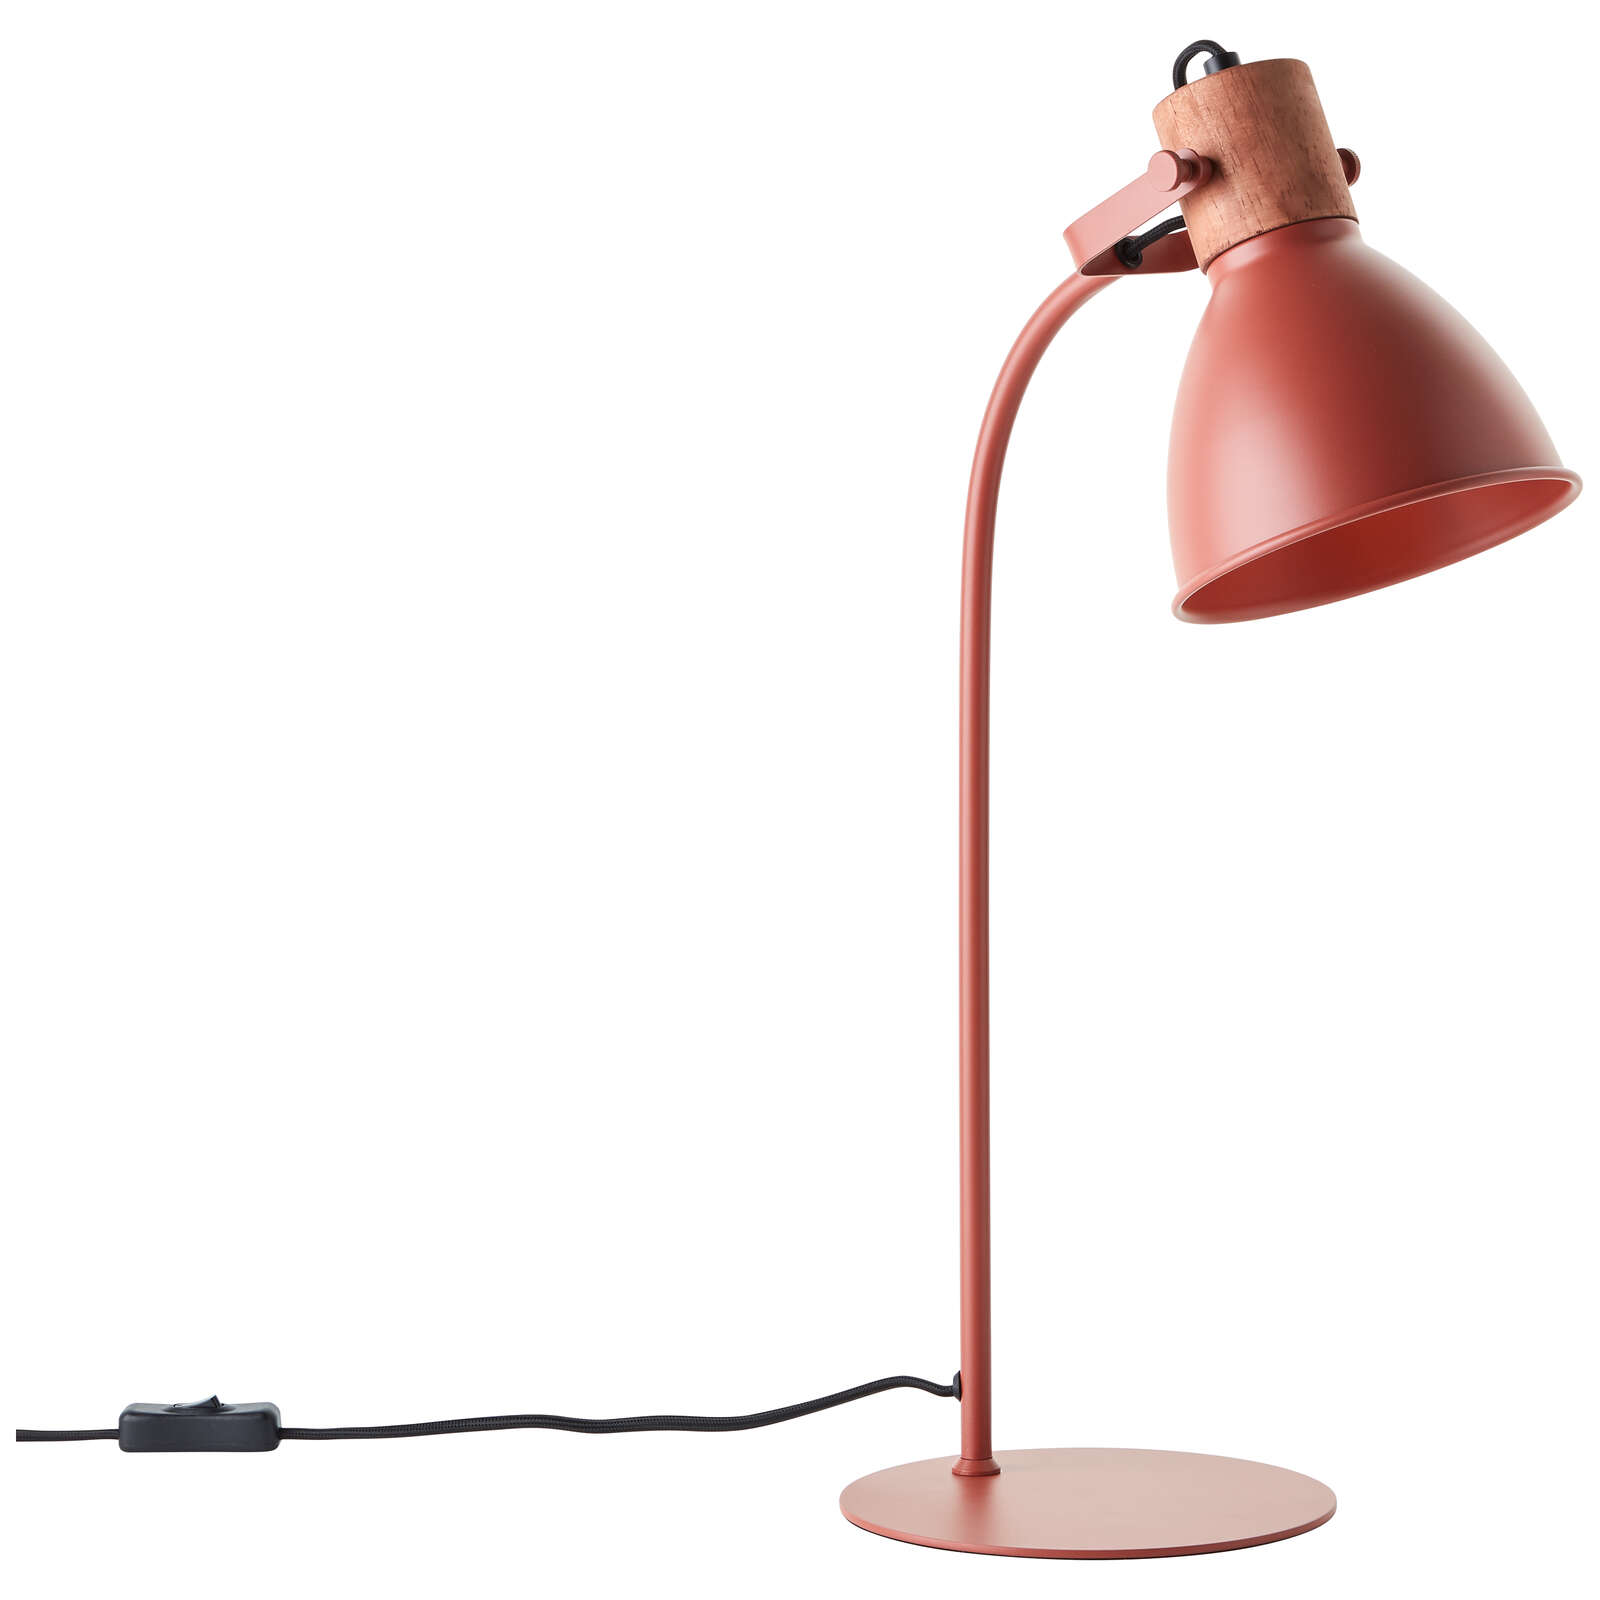             Wooden table lamp - Franziska 2 - Red
        